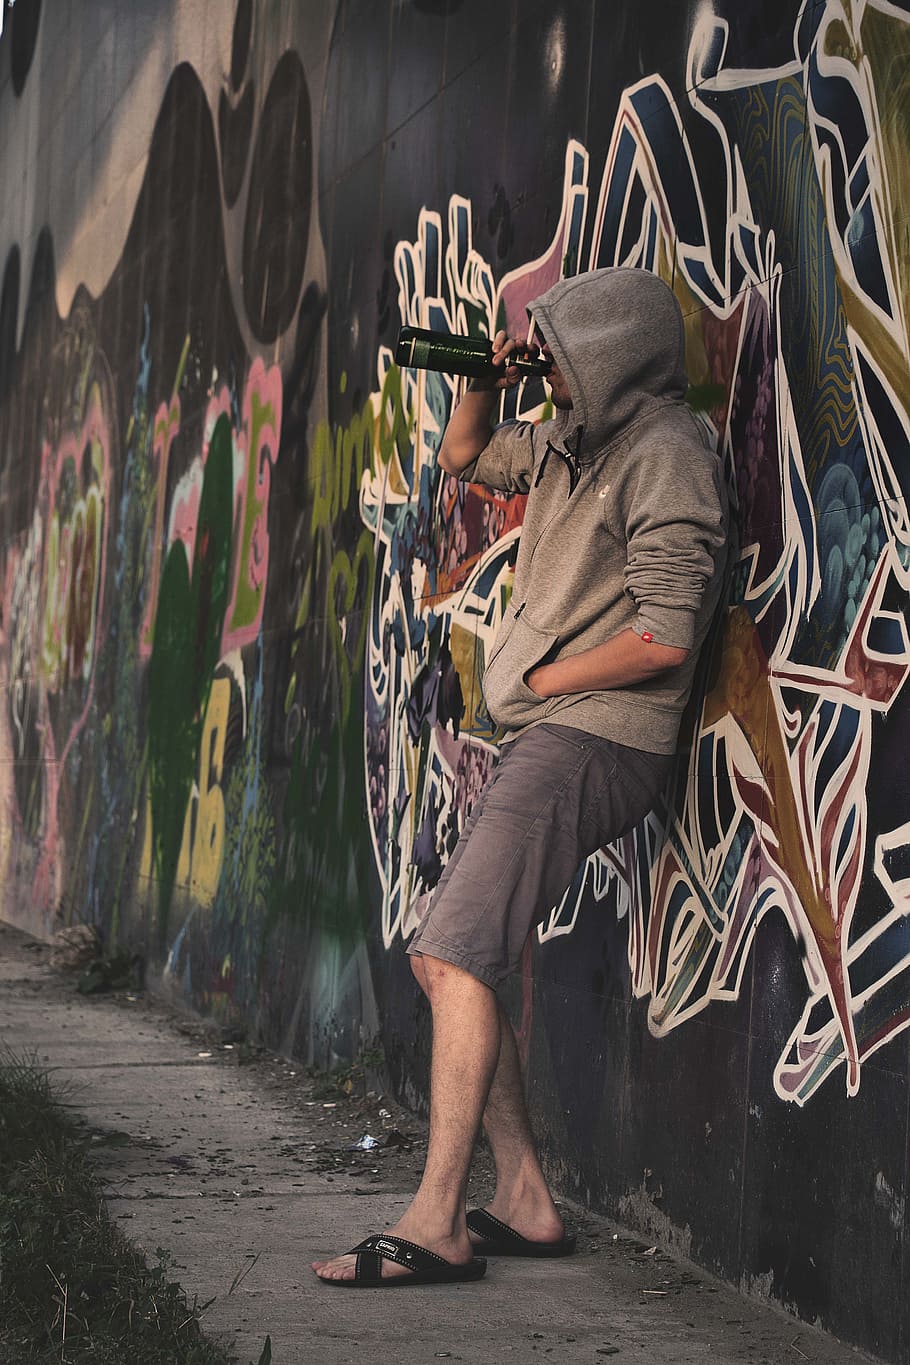 person, leaning, wall drinking, bottle, man, guy, on the street, graffiti, graffiti wall, russia